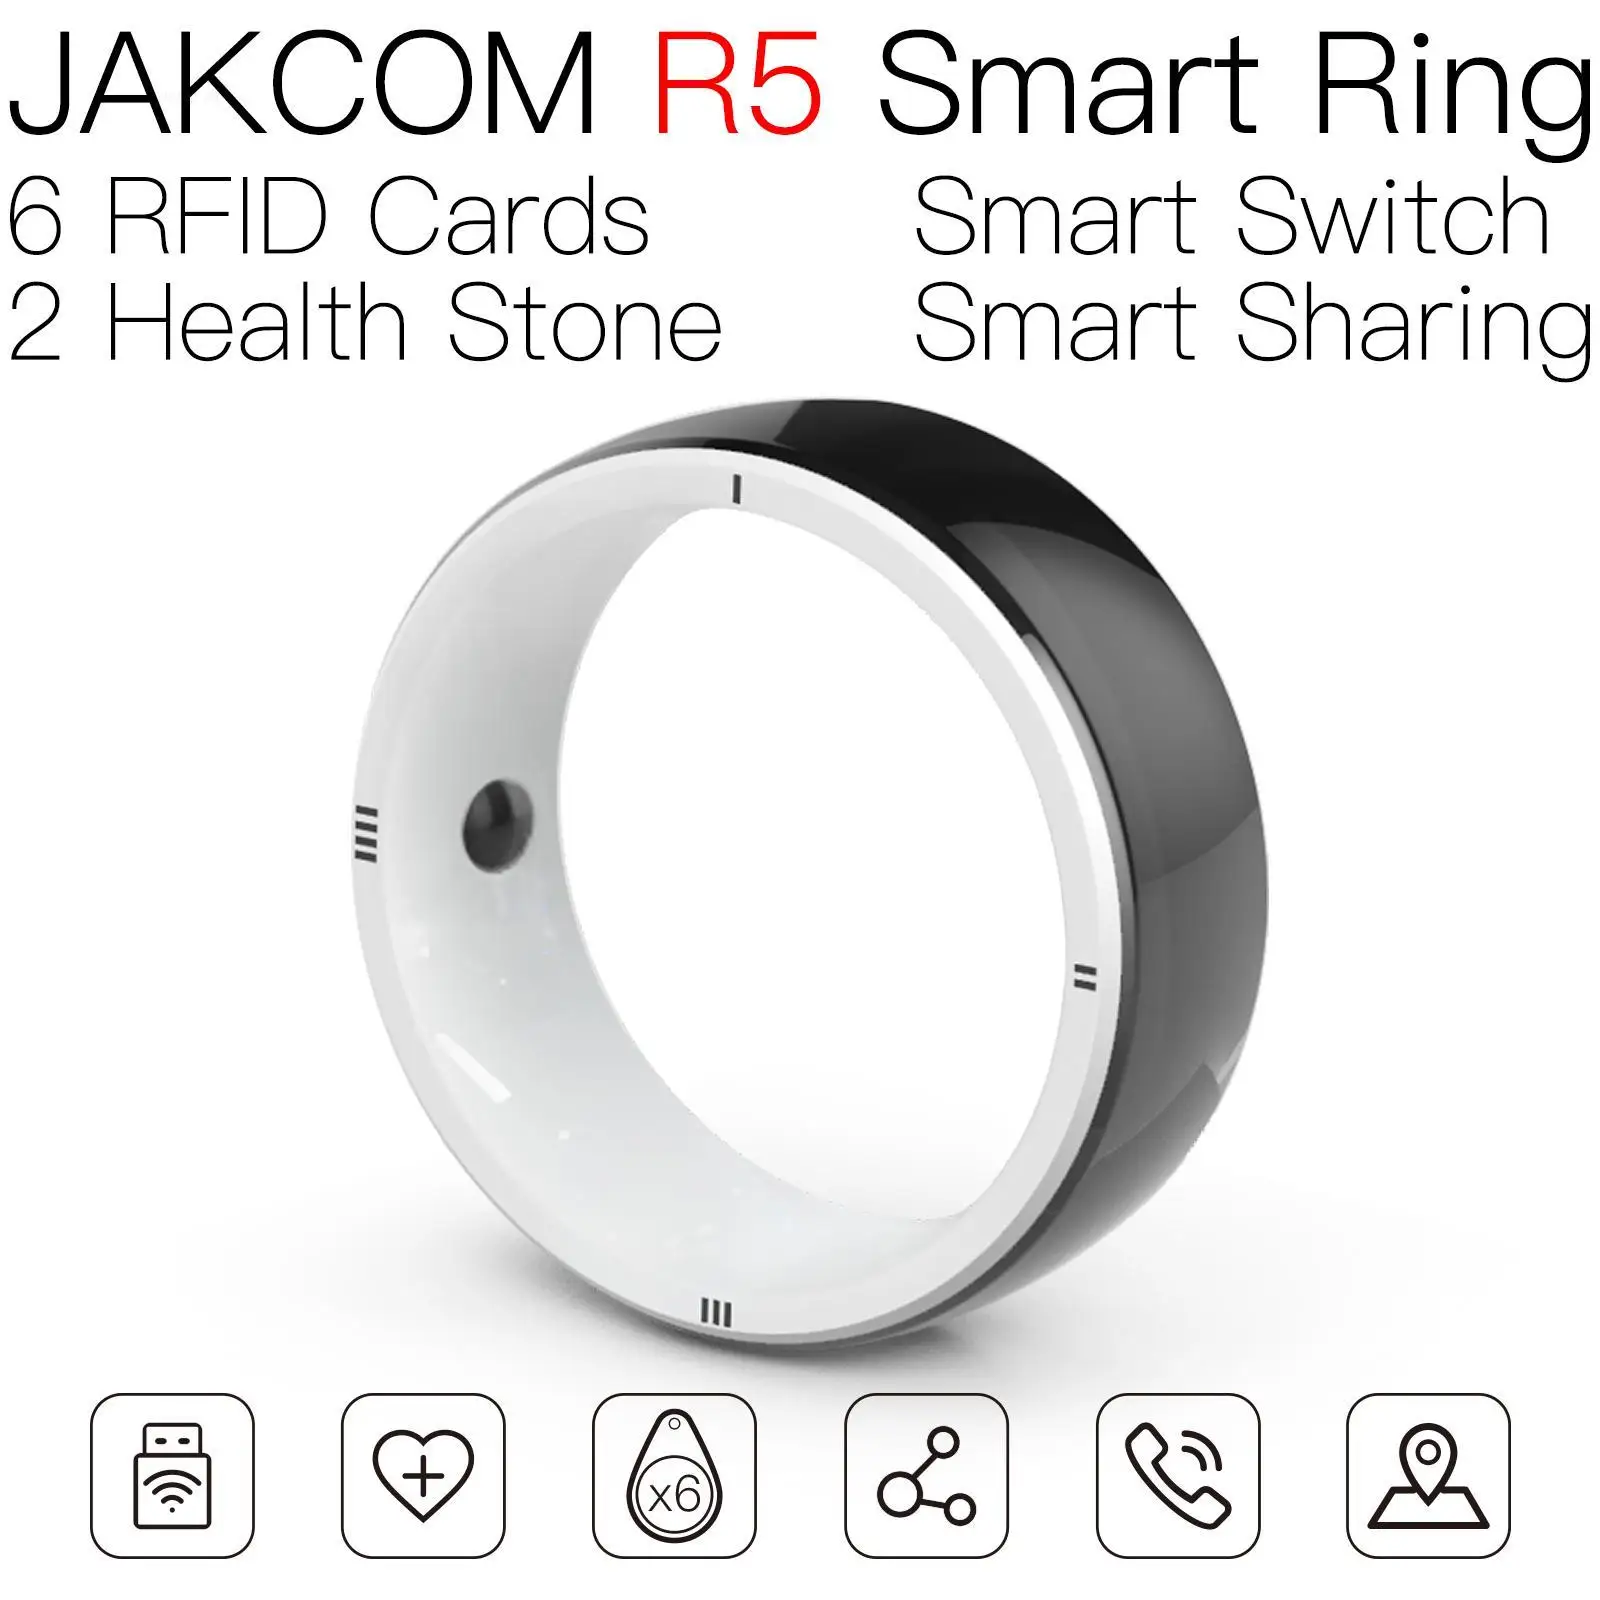 

JAKCOM R5 Smart Ring Nice than pigeon rings aliminuim card bob carte amiboo judy bracelet rfid realme official store iso